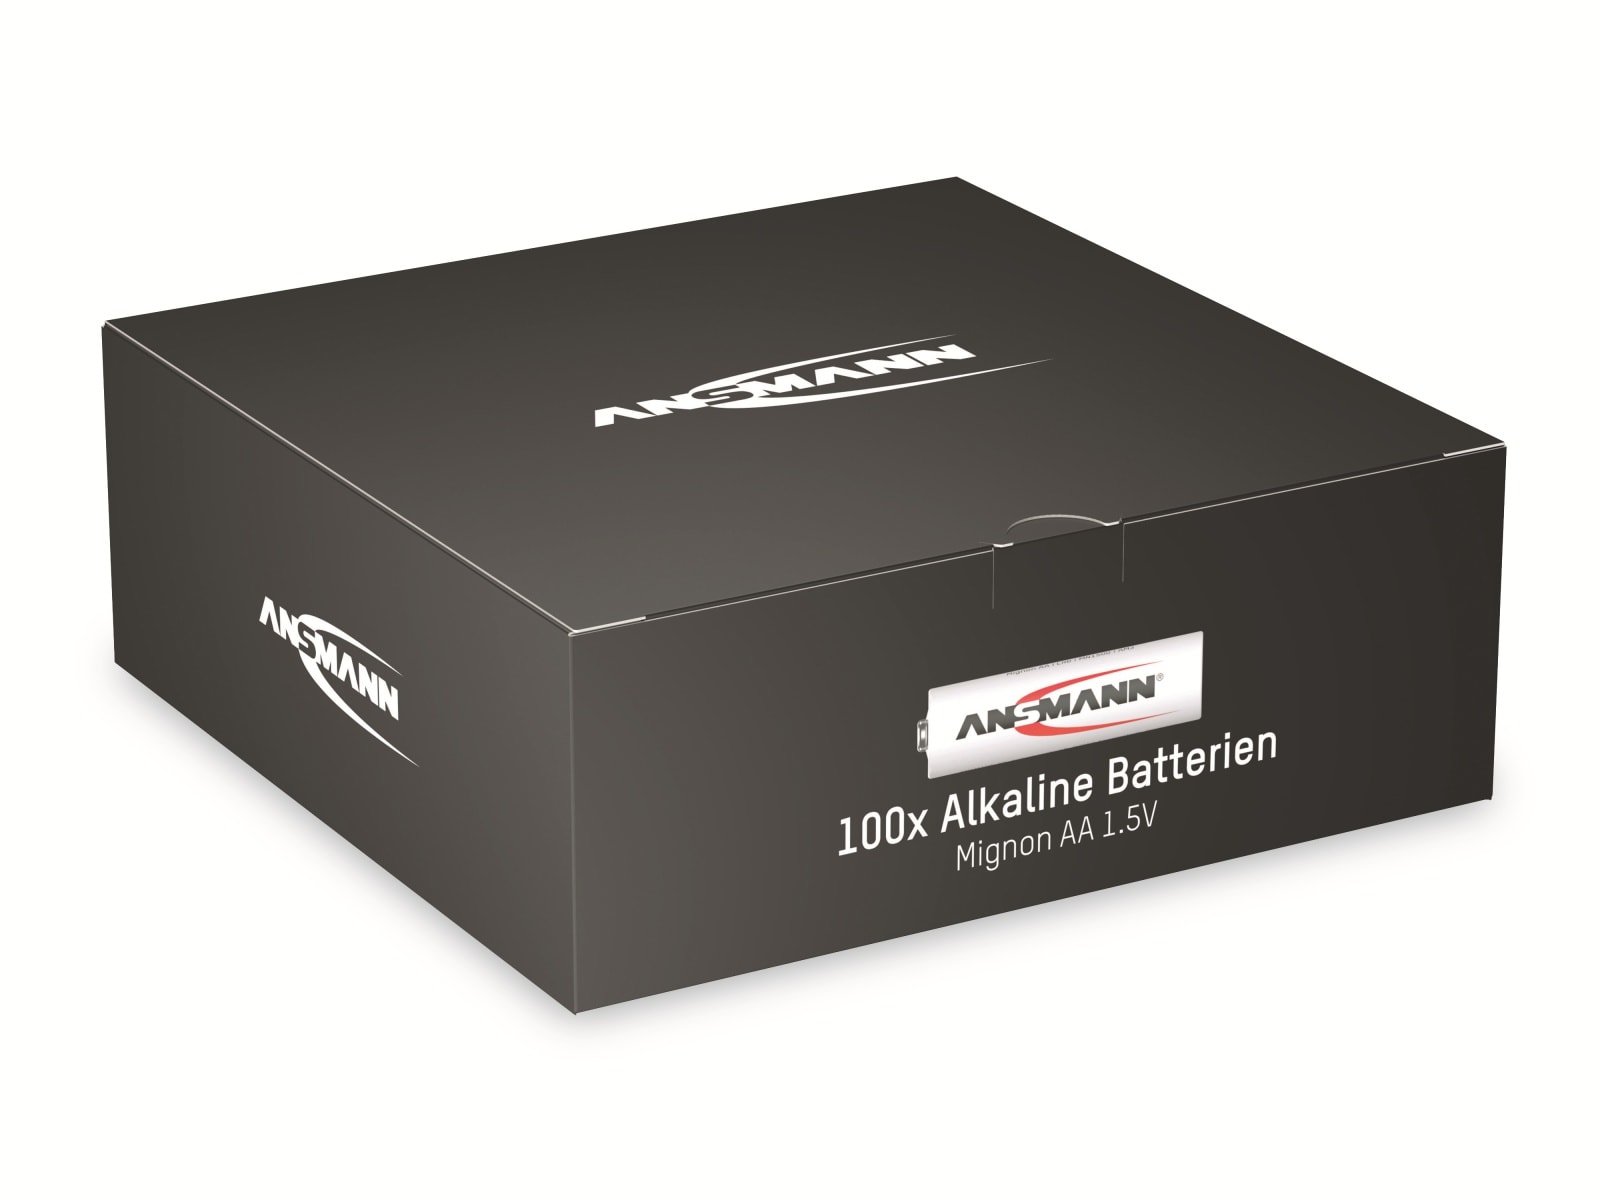 ANSMANN Mignon-Batterie-Set, Alkaline, 100 Stück